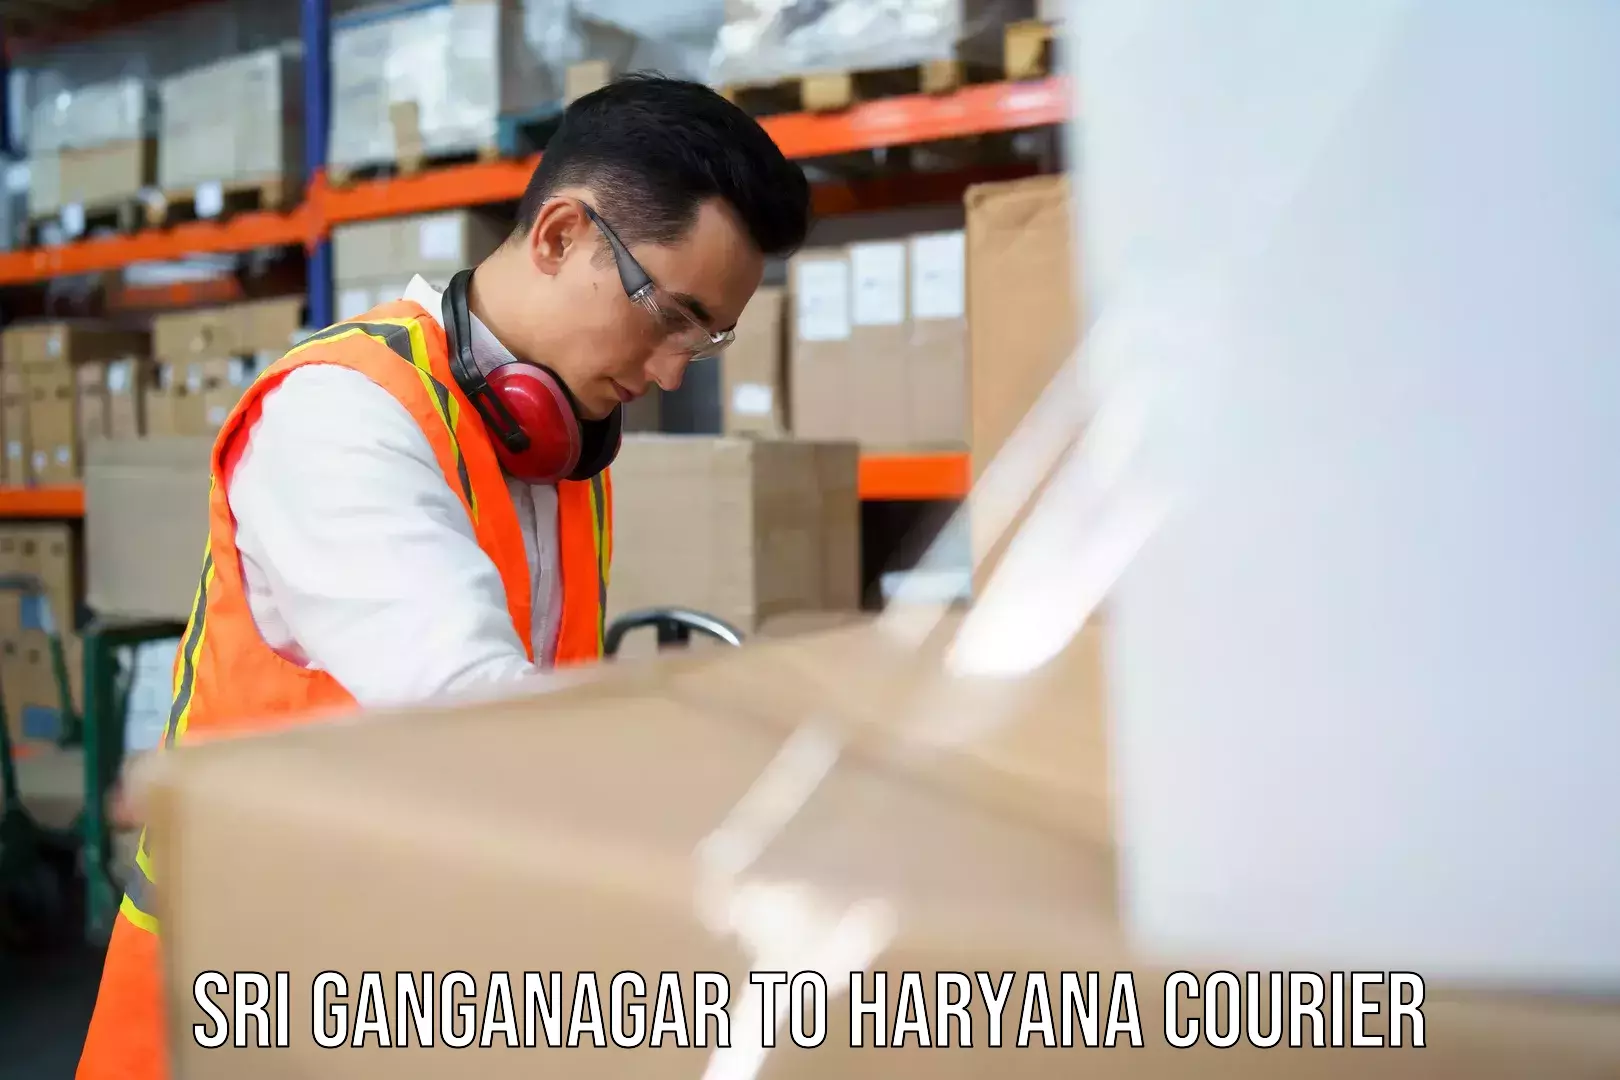 Customer-focused courier Sri Ganganagar to Charkhi Dadri